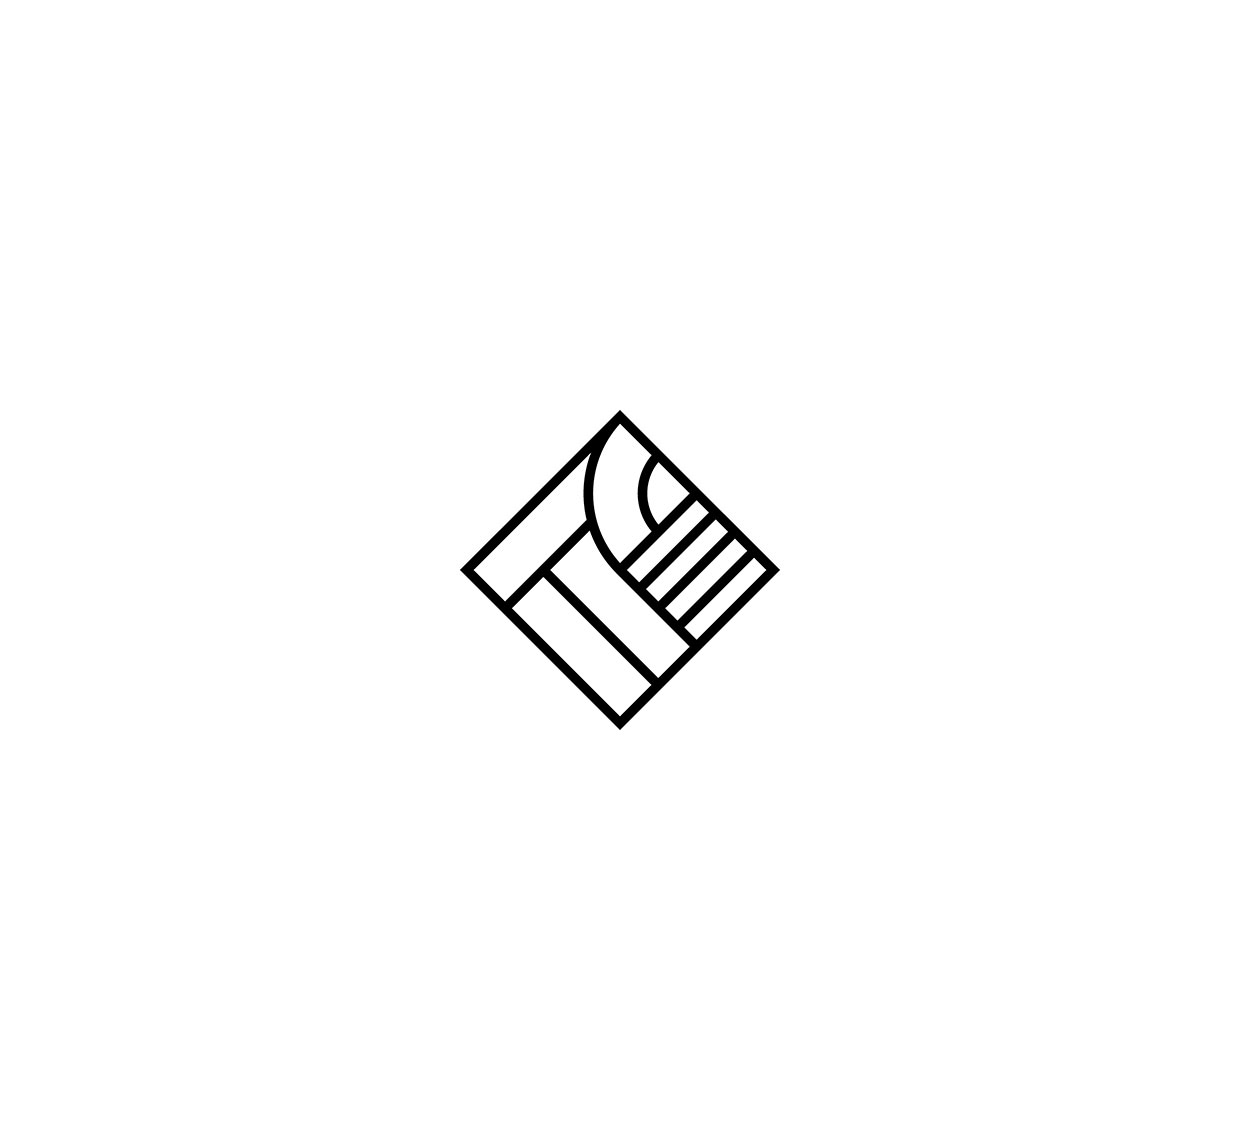 Minimal logo marque branding design for luxury print company Strut and Fibre